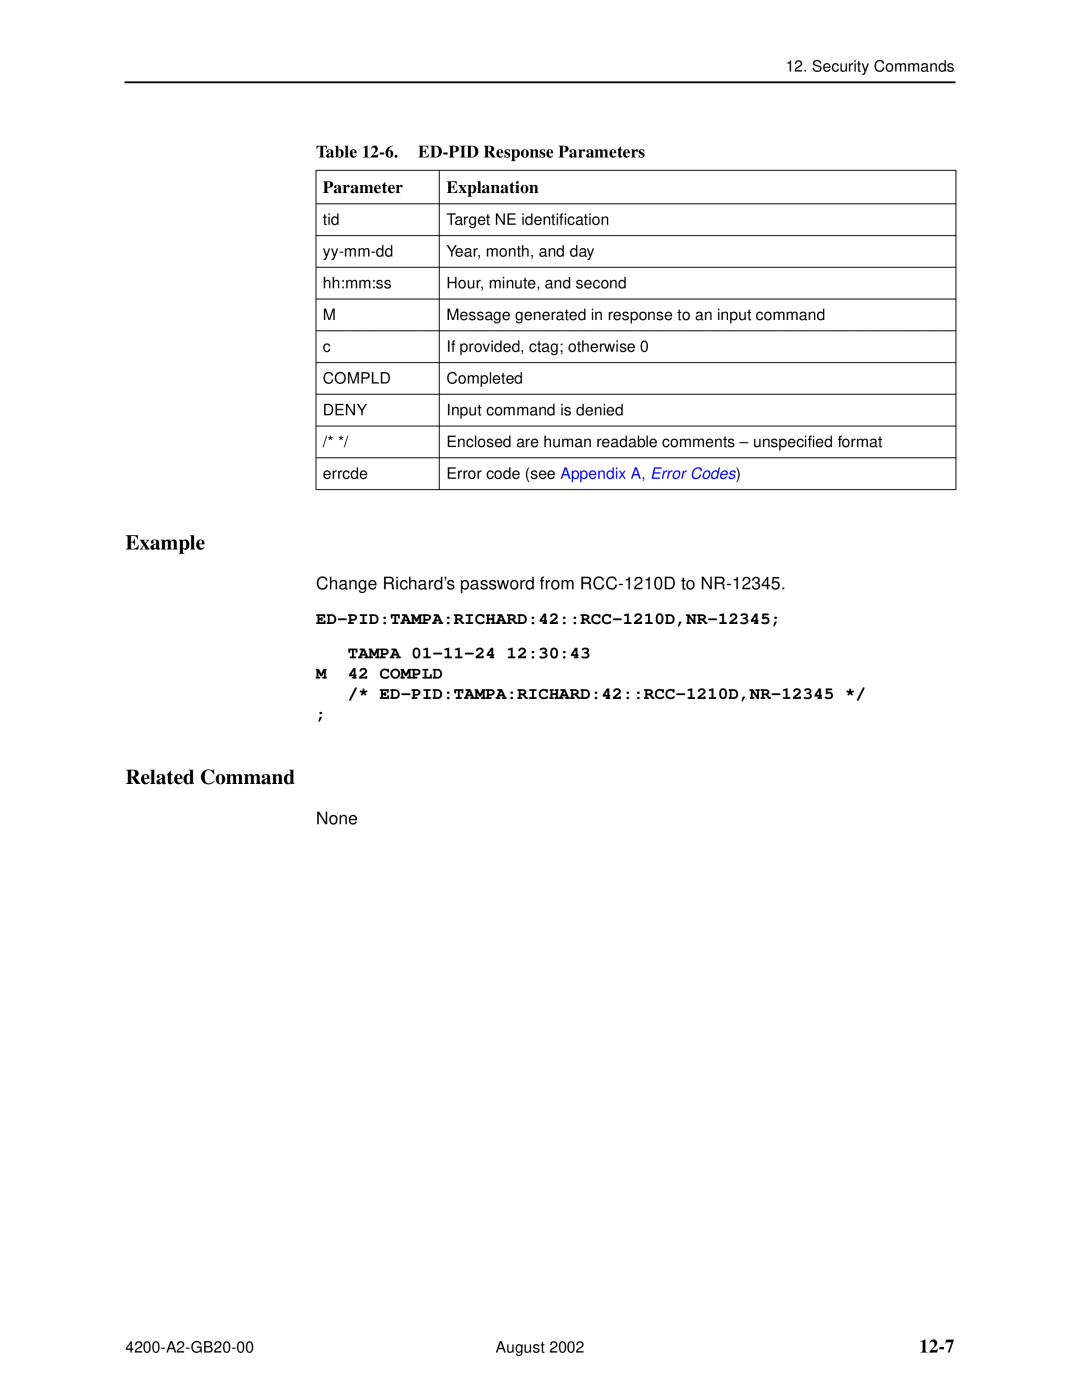 Paradyne 4200 manual 12-7, 6. ED-PID Response Parameters, ED-PIDTAMPARICHARD42RCC-1210D,NR-12345 TAMPA 01-11-24 M 42 COMPLD 